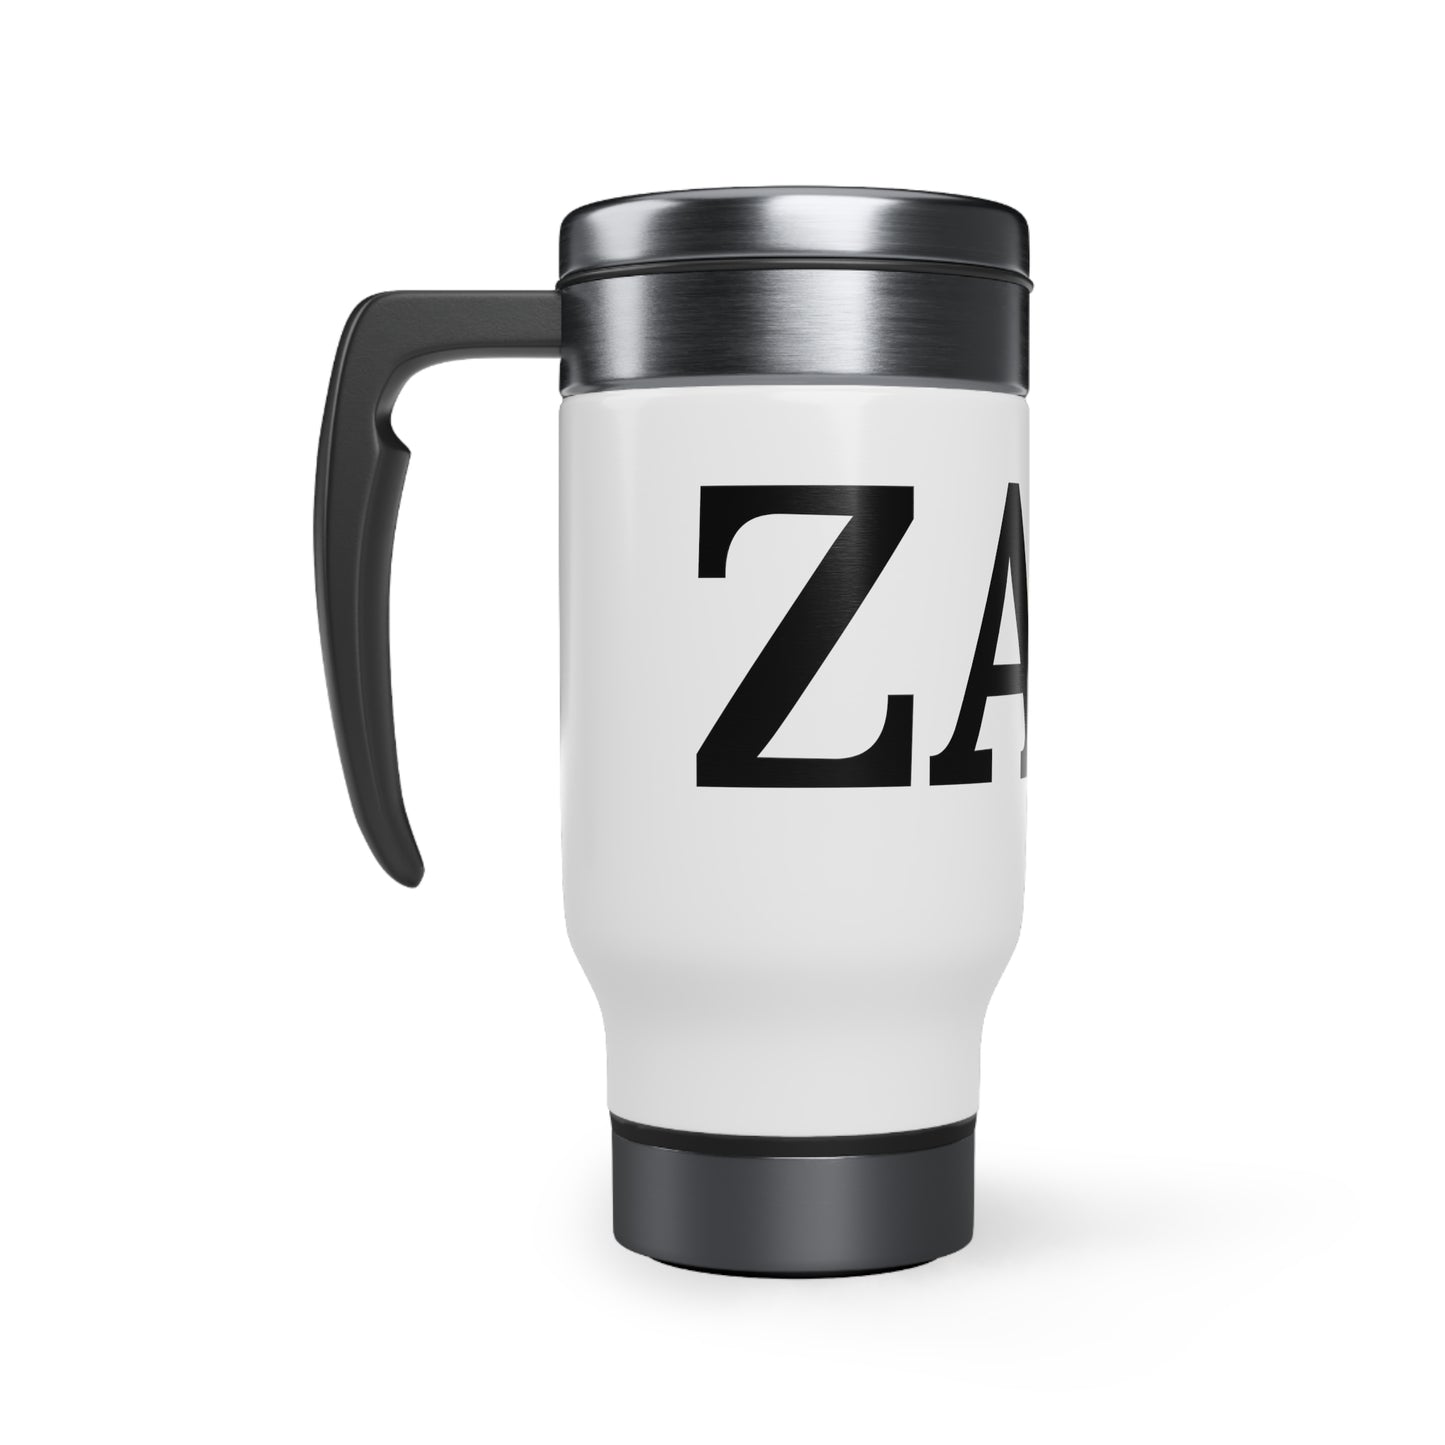 ZAM Travel Mug with Handle, 14oz